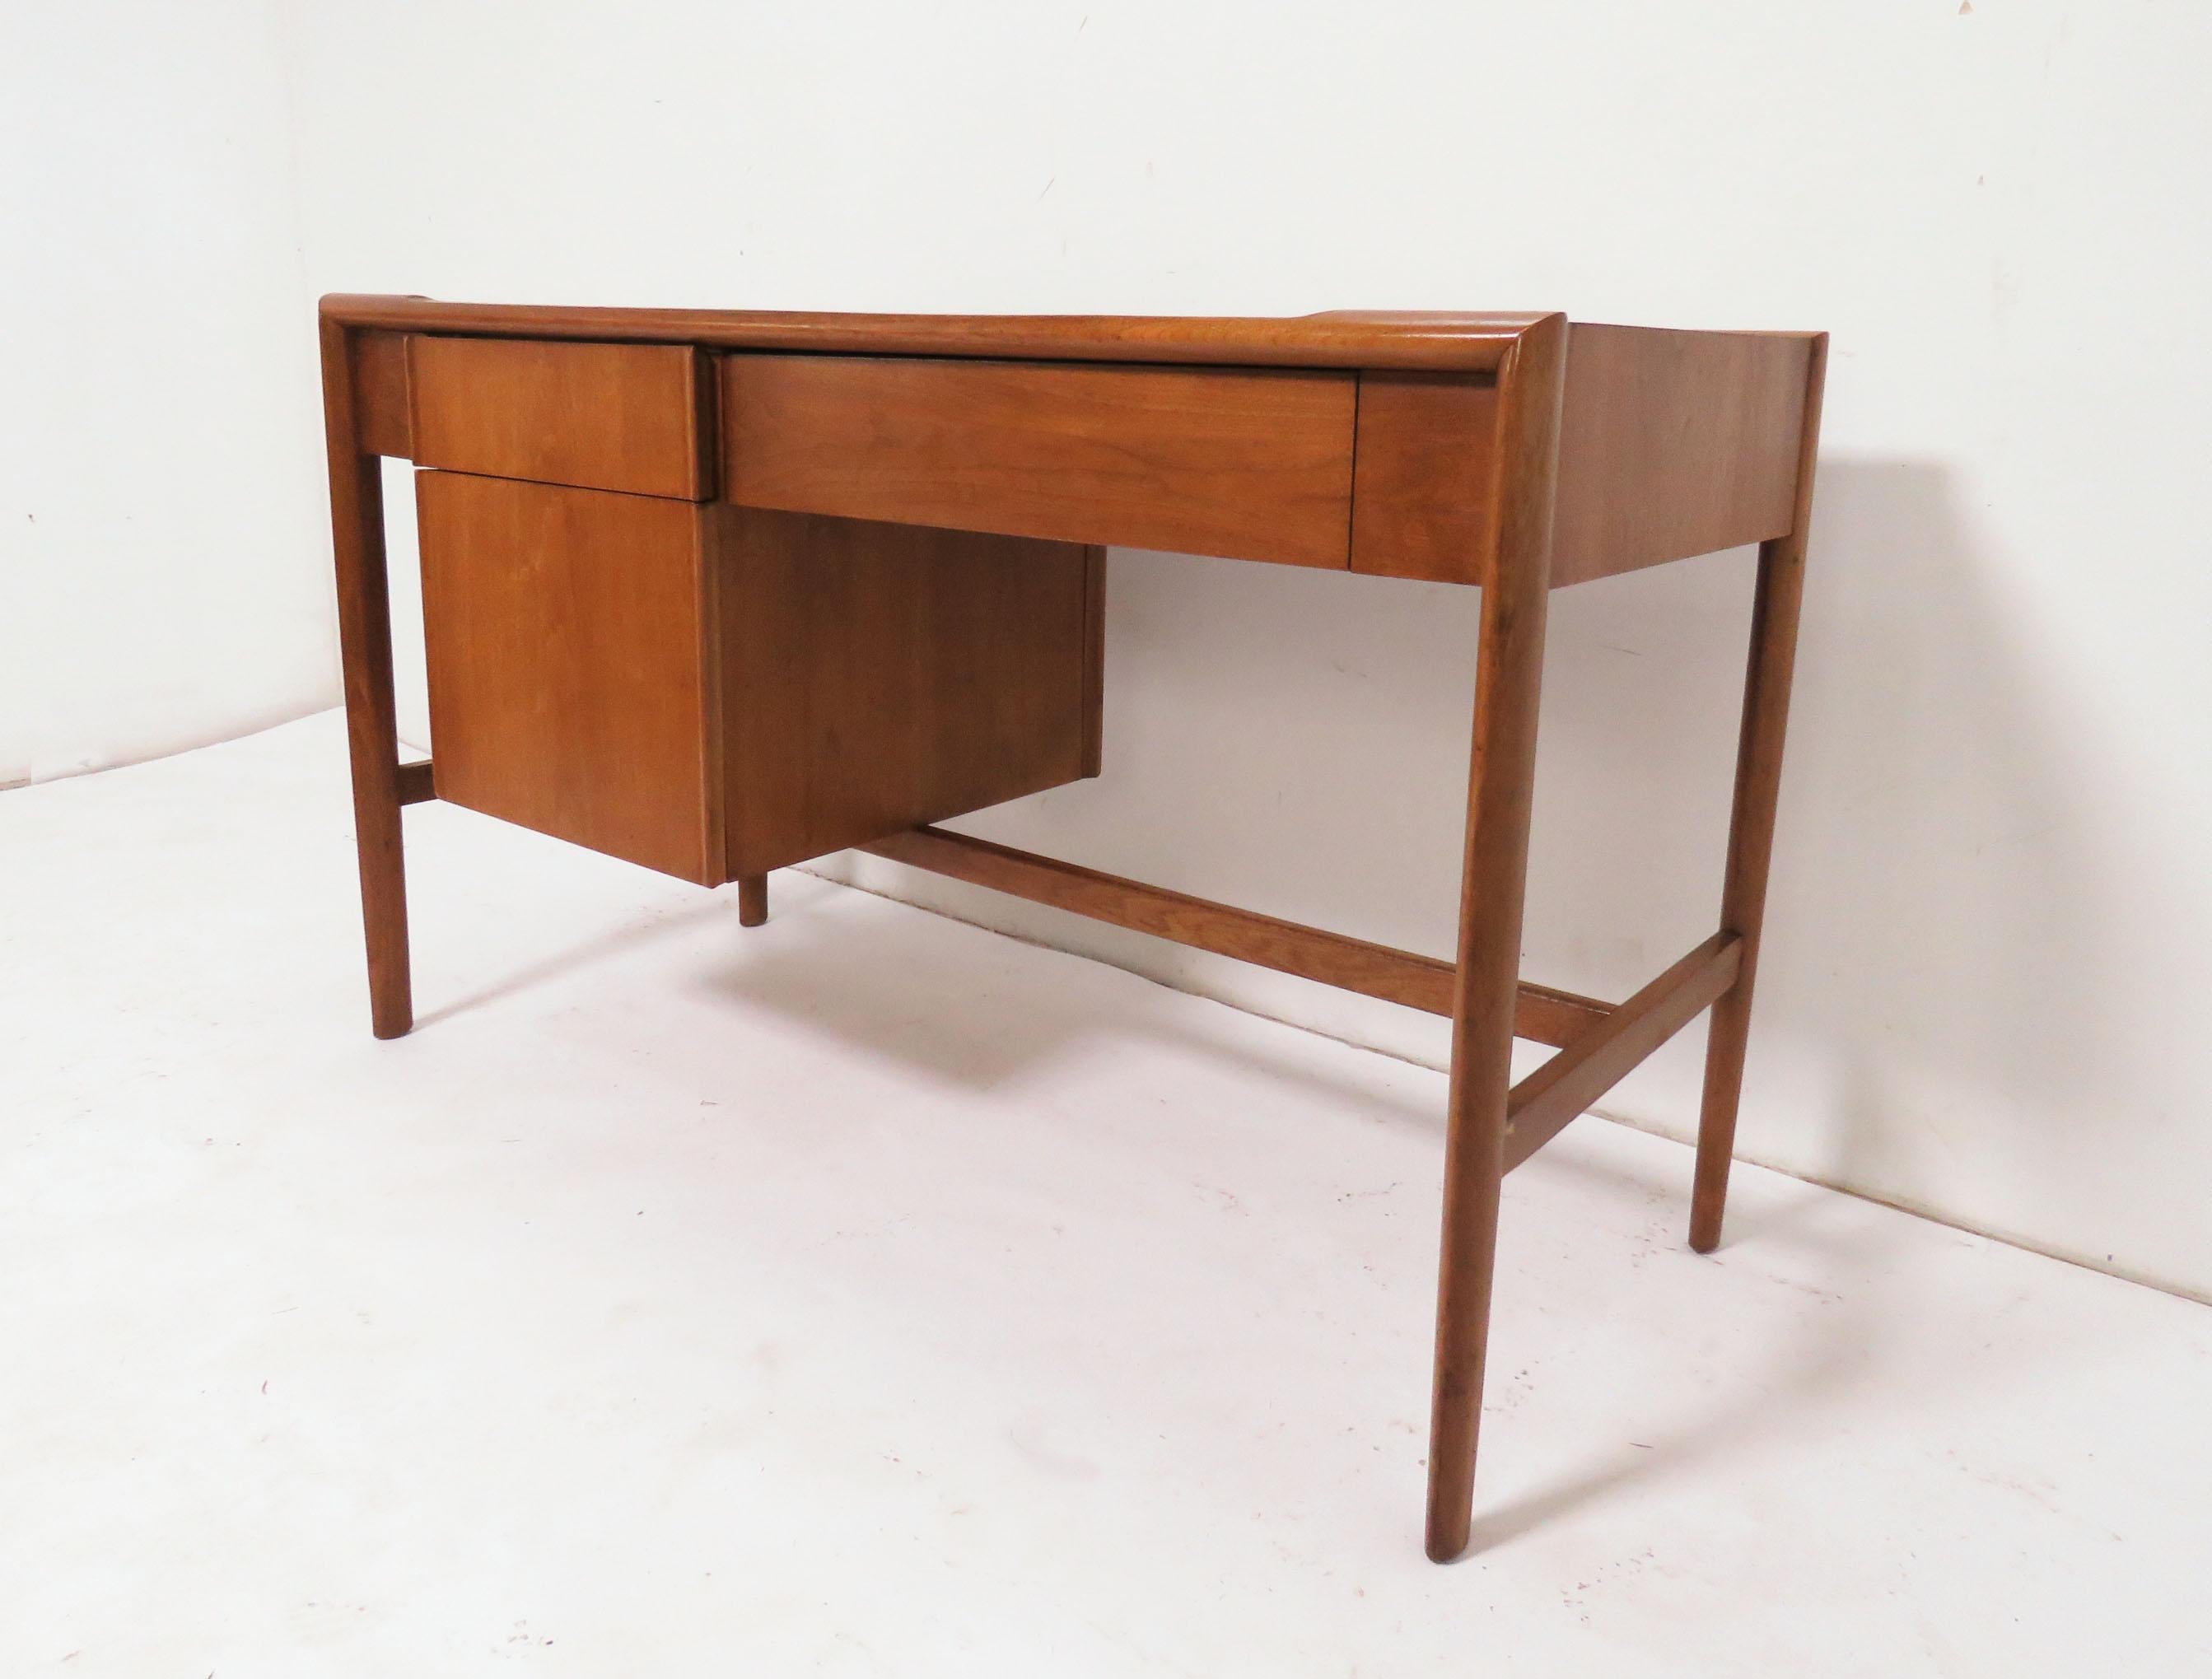 Midcentury desk by John Van Koert for Drexel, circa 1960s. With its narrow profile of 20.5